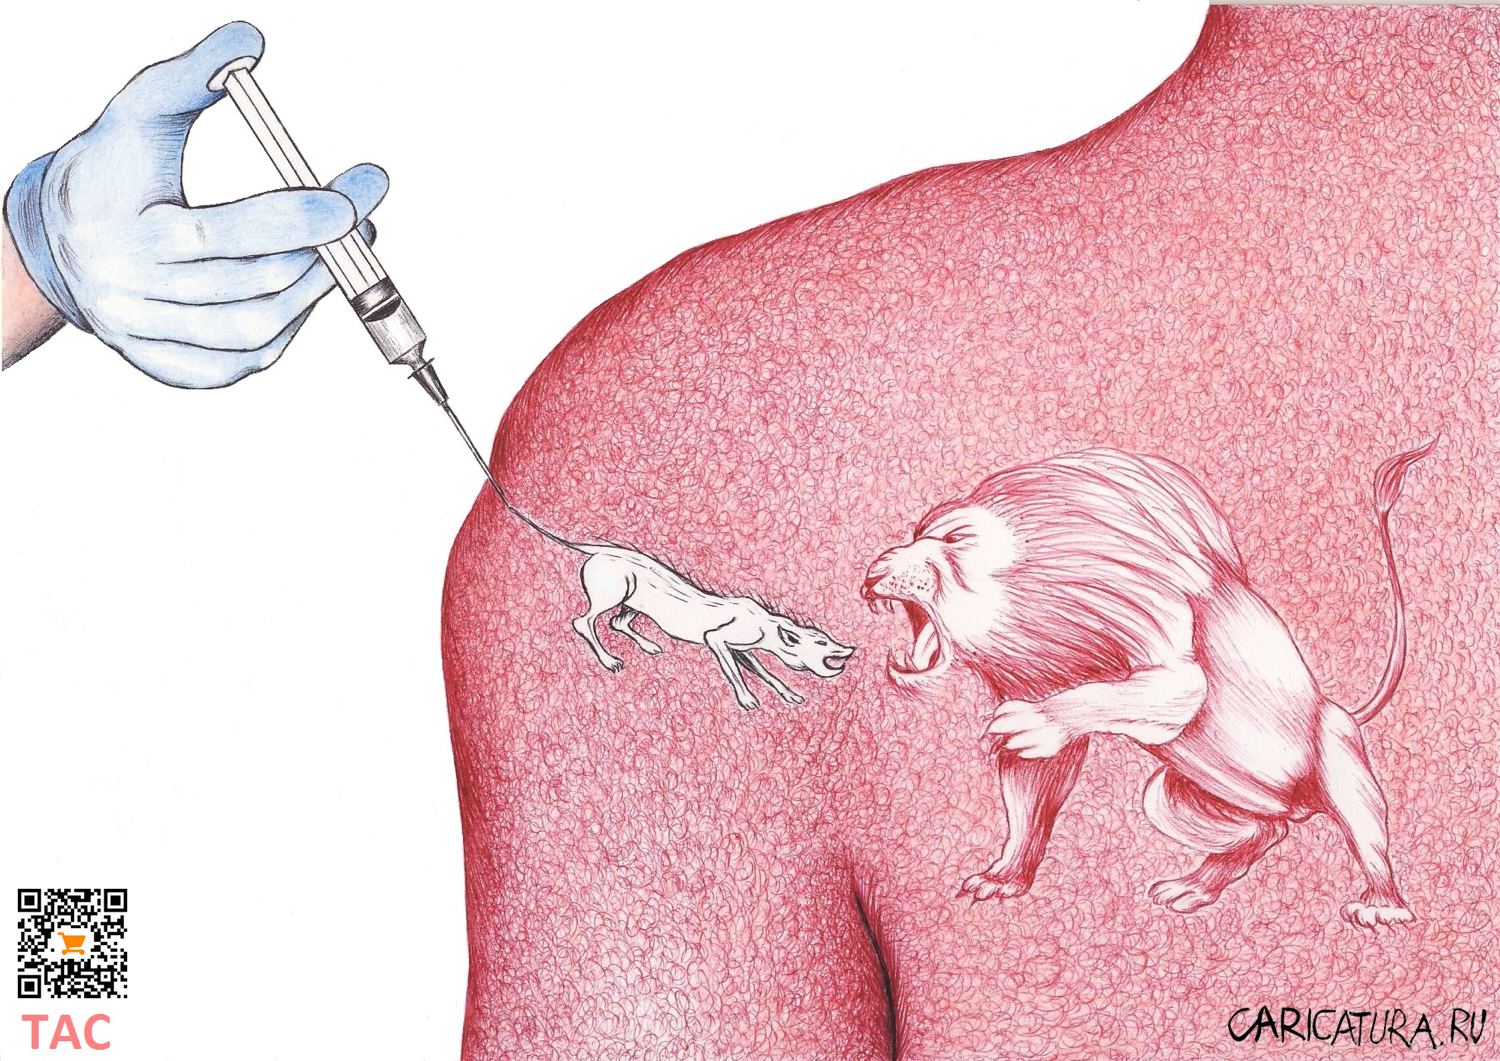 Карикатура "Вакцина и иммунитет", Александр Троицкий